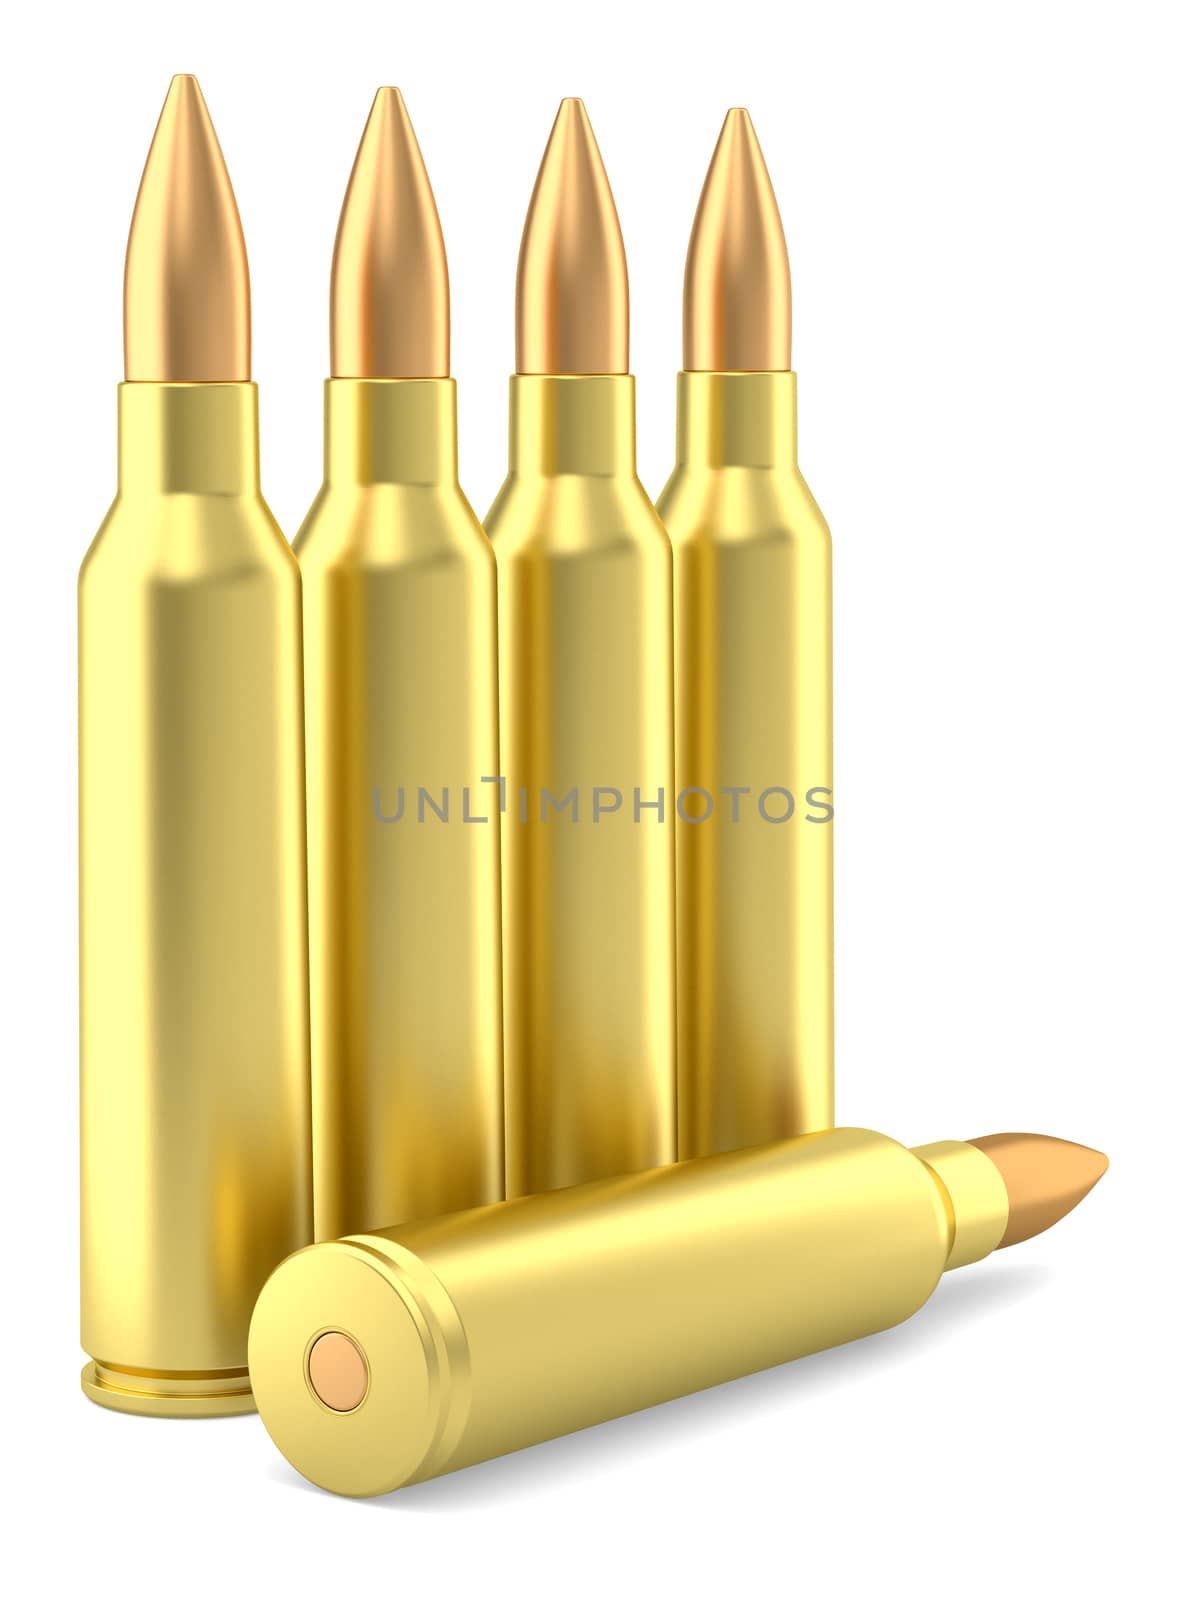 Large caliber rifle ammunition cartridges on white background. High resolution 3D image